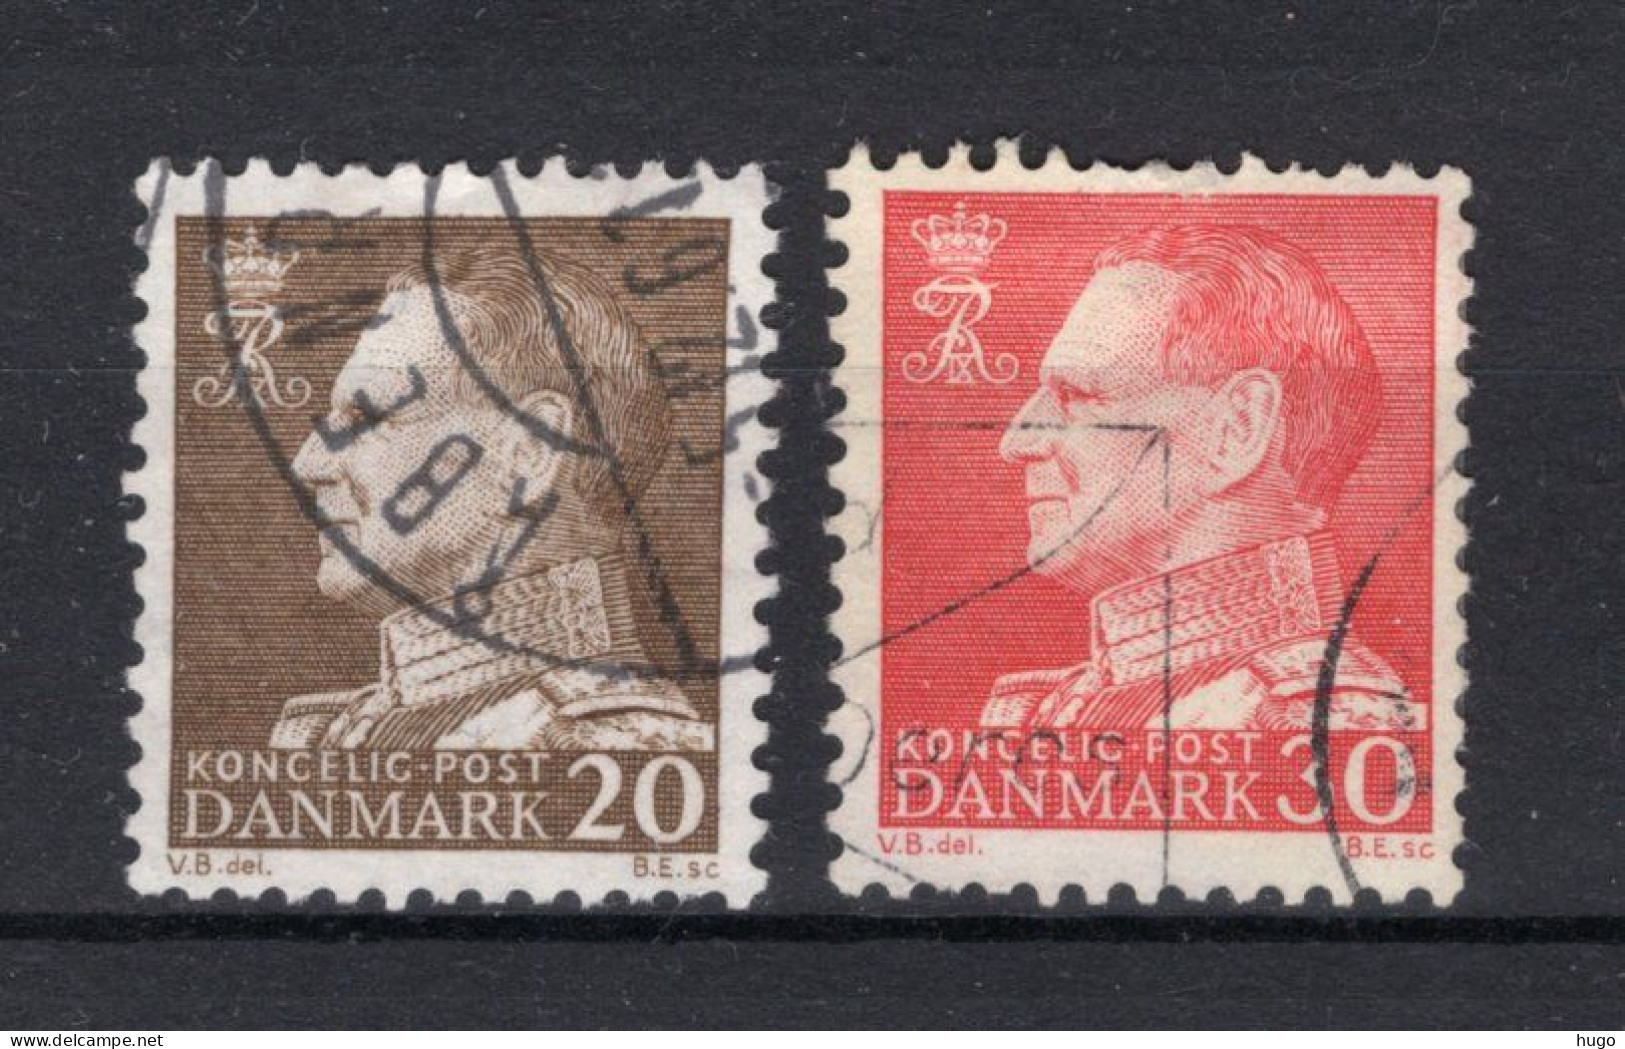 DENEMARKEN Yt. 398/399° Gestempeld 1961-1962 - Oblitérés